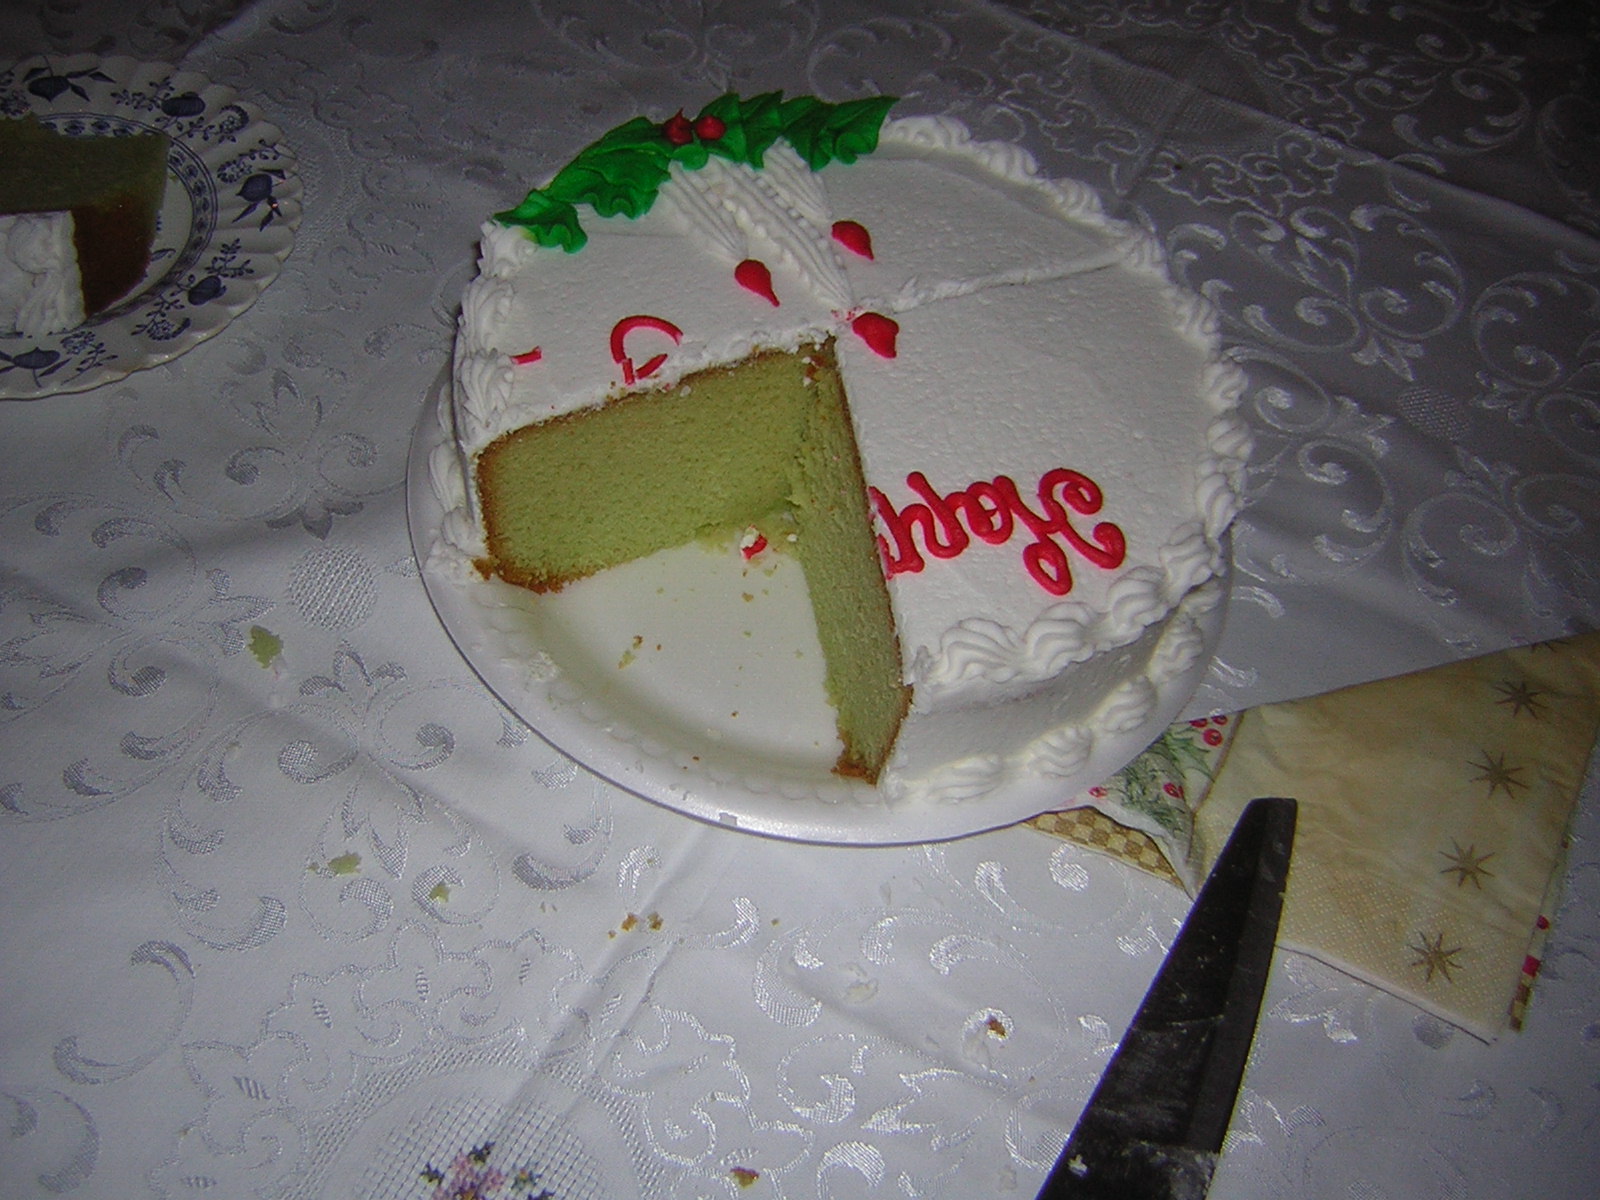 [Our+Dessert+Cake+12-25-2007+6-44-33+PM+1600x1200.JPG]